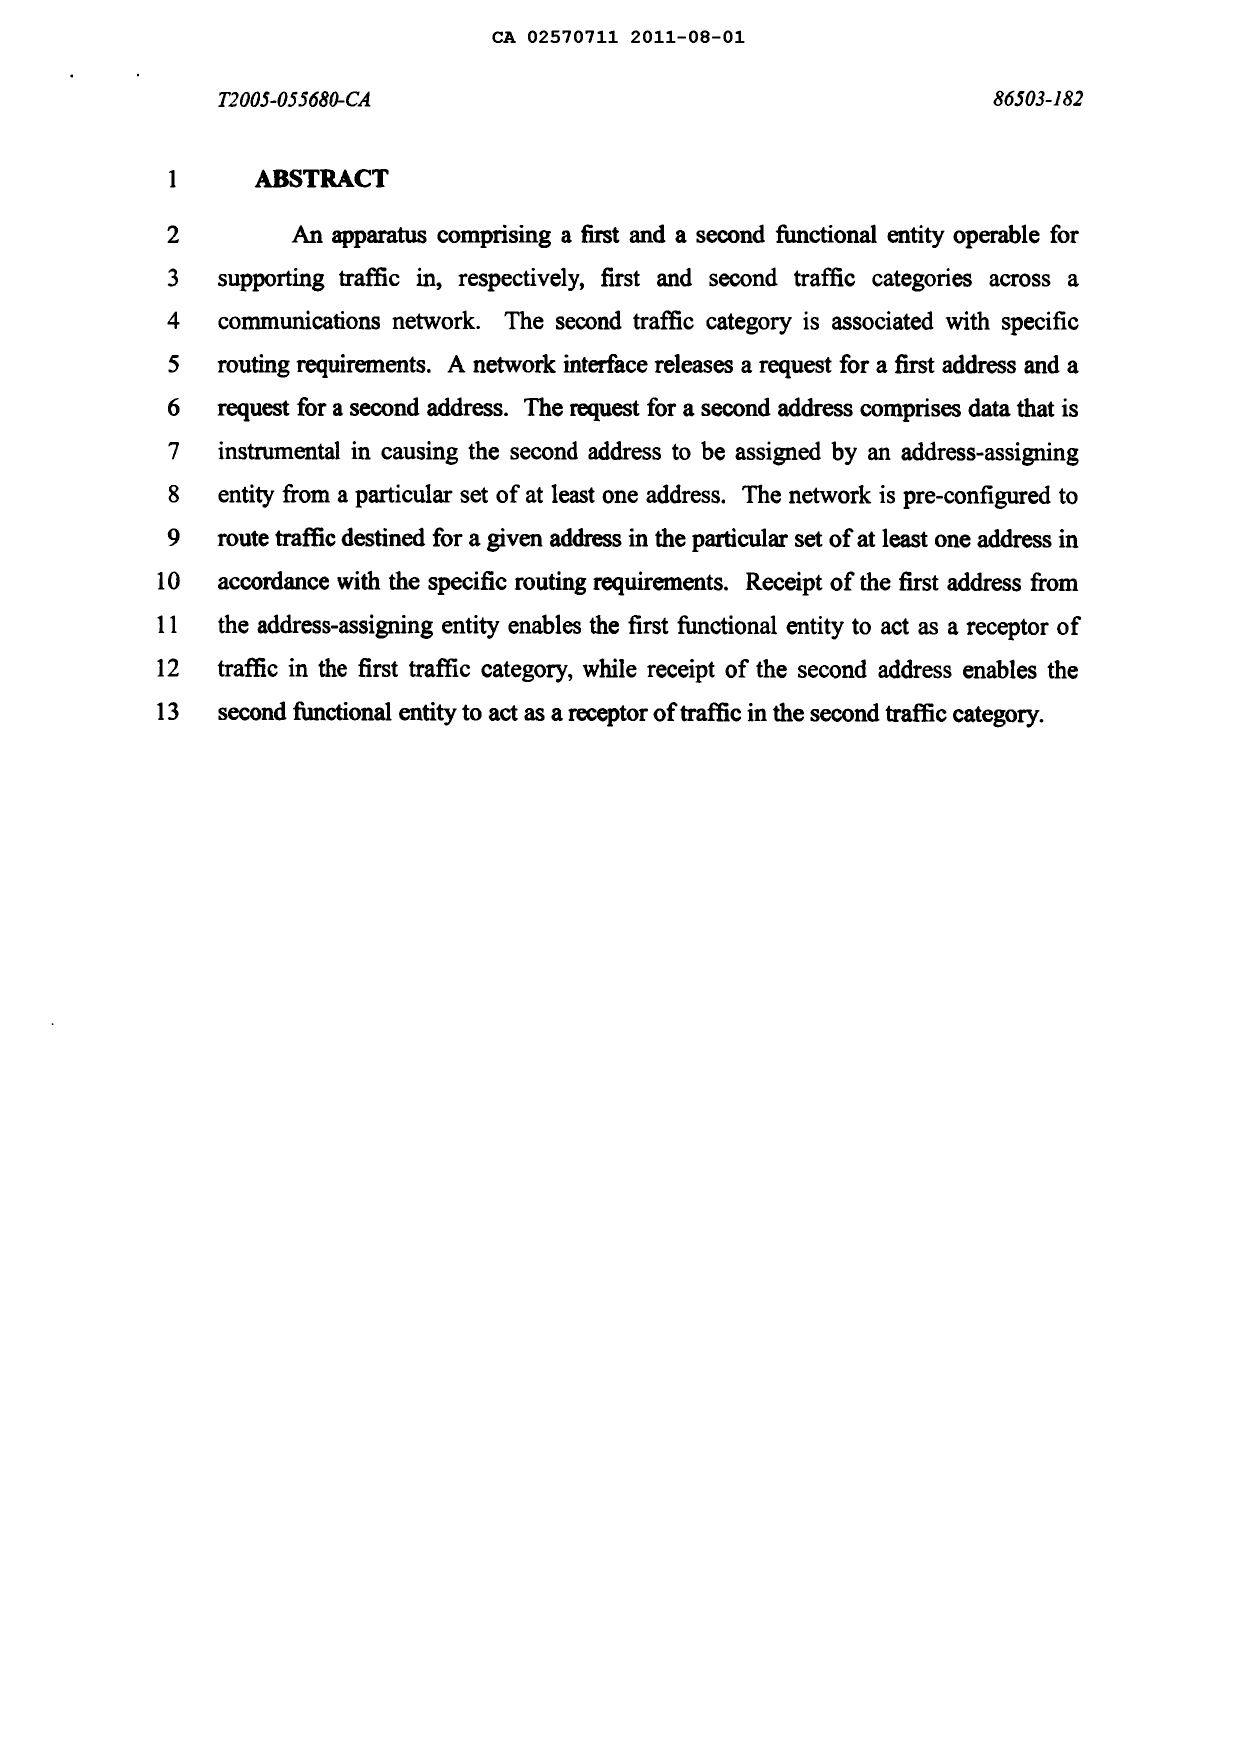 Canadian Patent Document 2570711. Prosecution-Amendment 20110801. Image 16 of 16